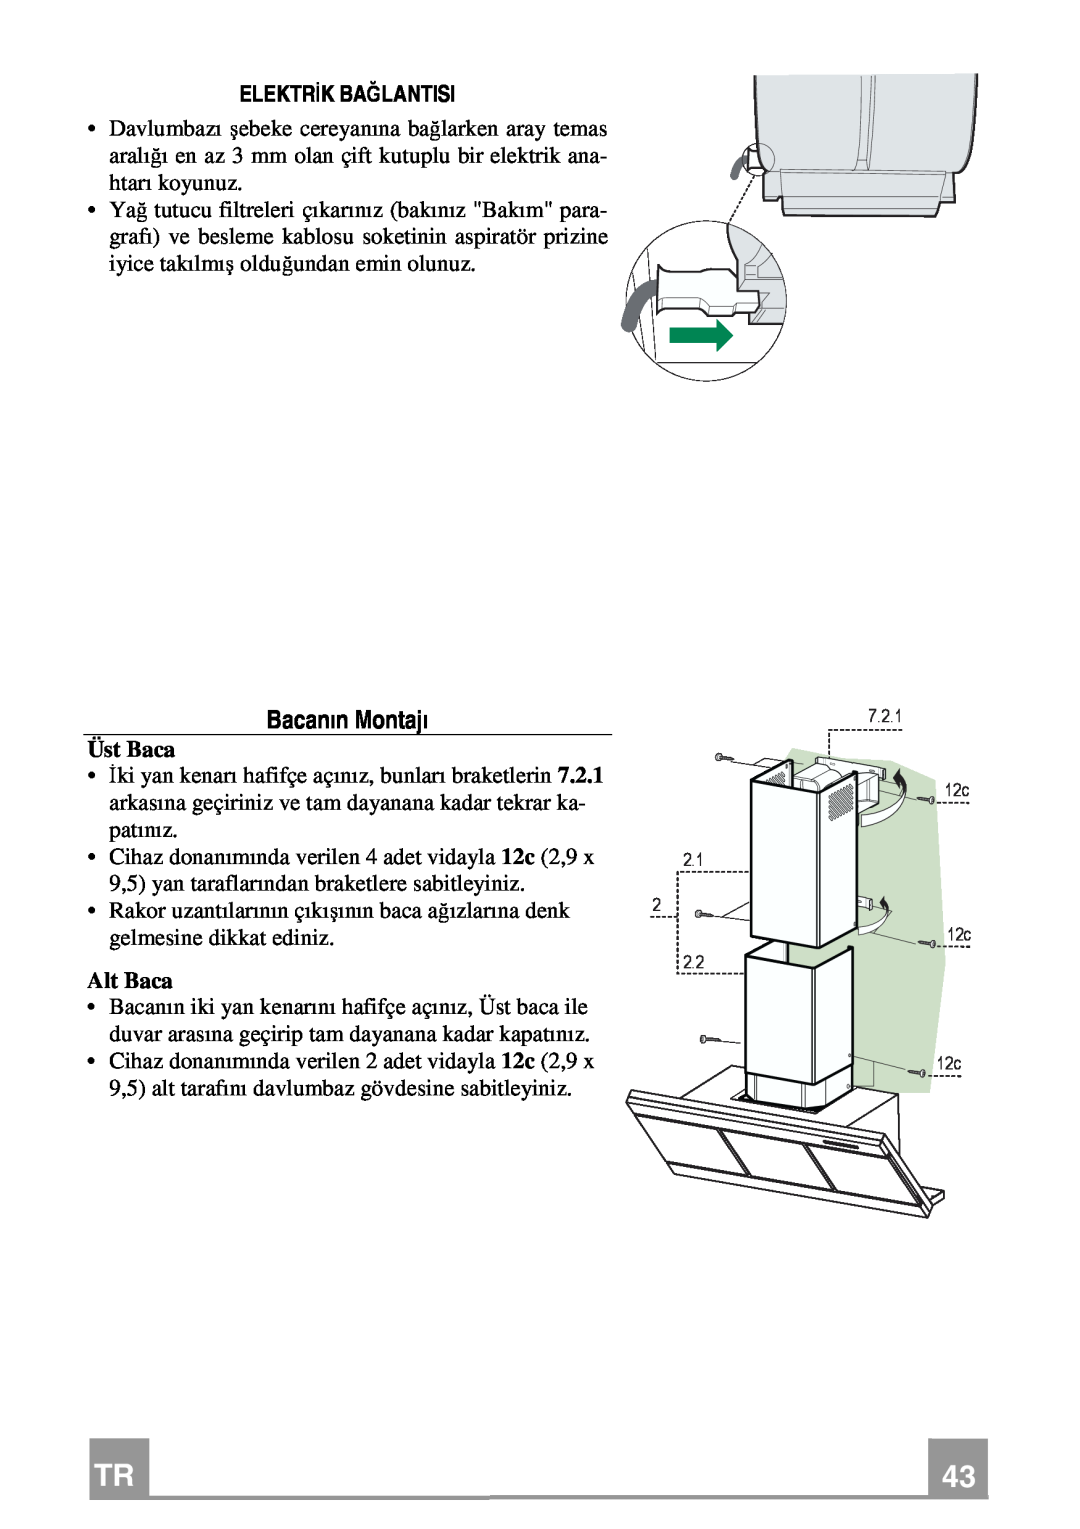 Franke Consumer Products FMY 907 manual Bacanın Montajı, Elektrik Bağlantisi, Üst Baca, Alt Baca 